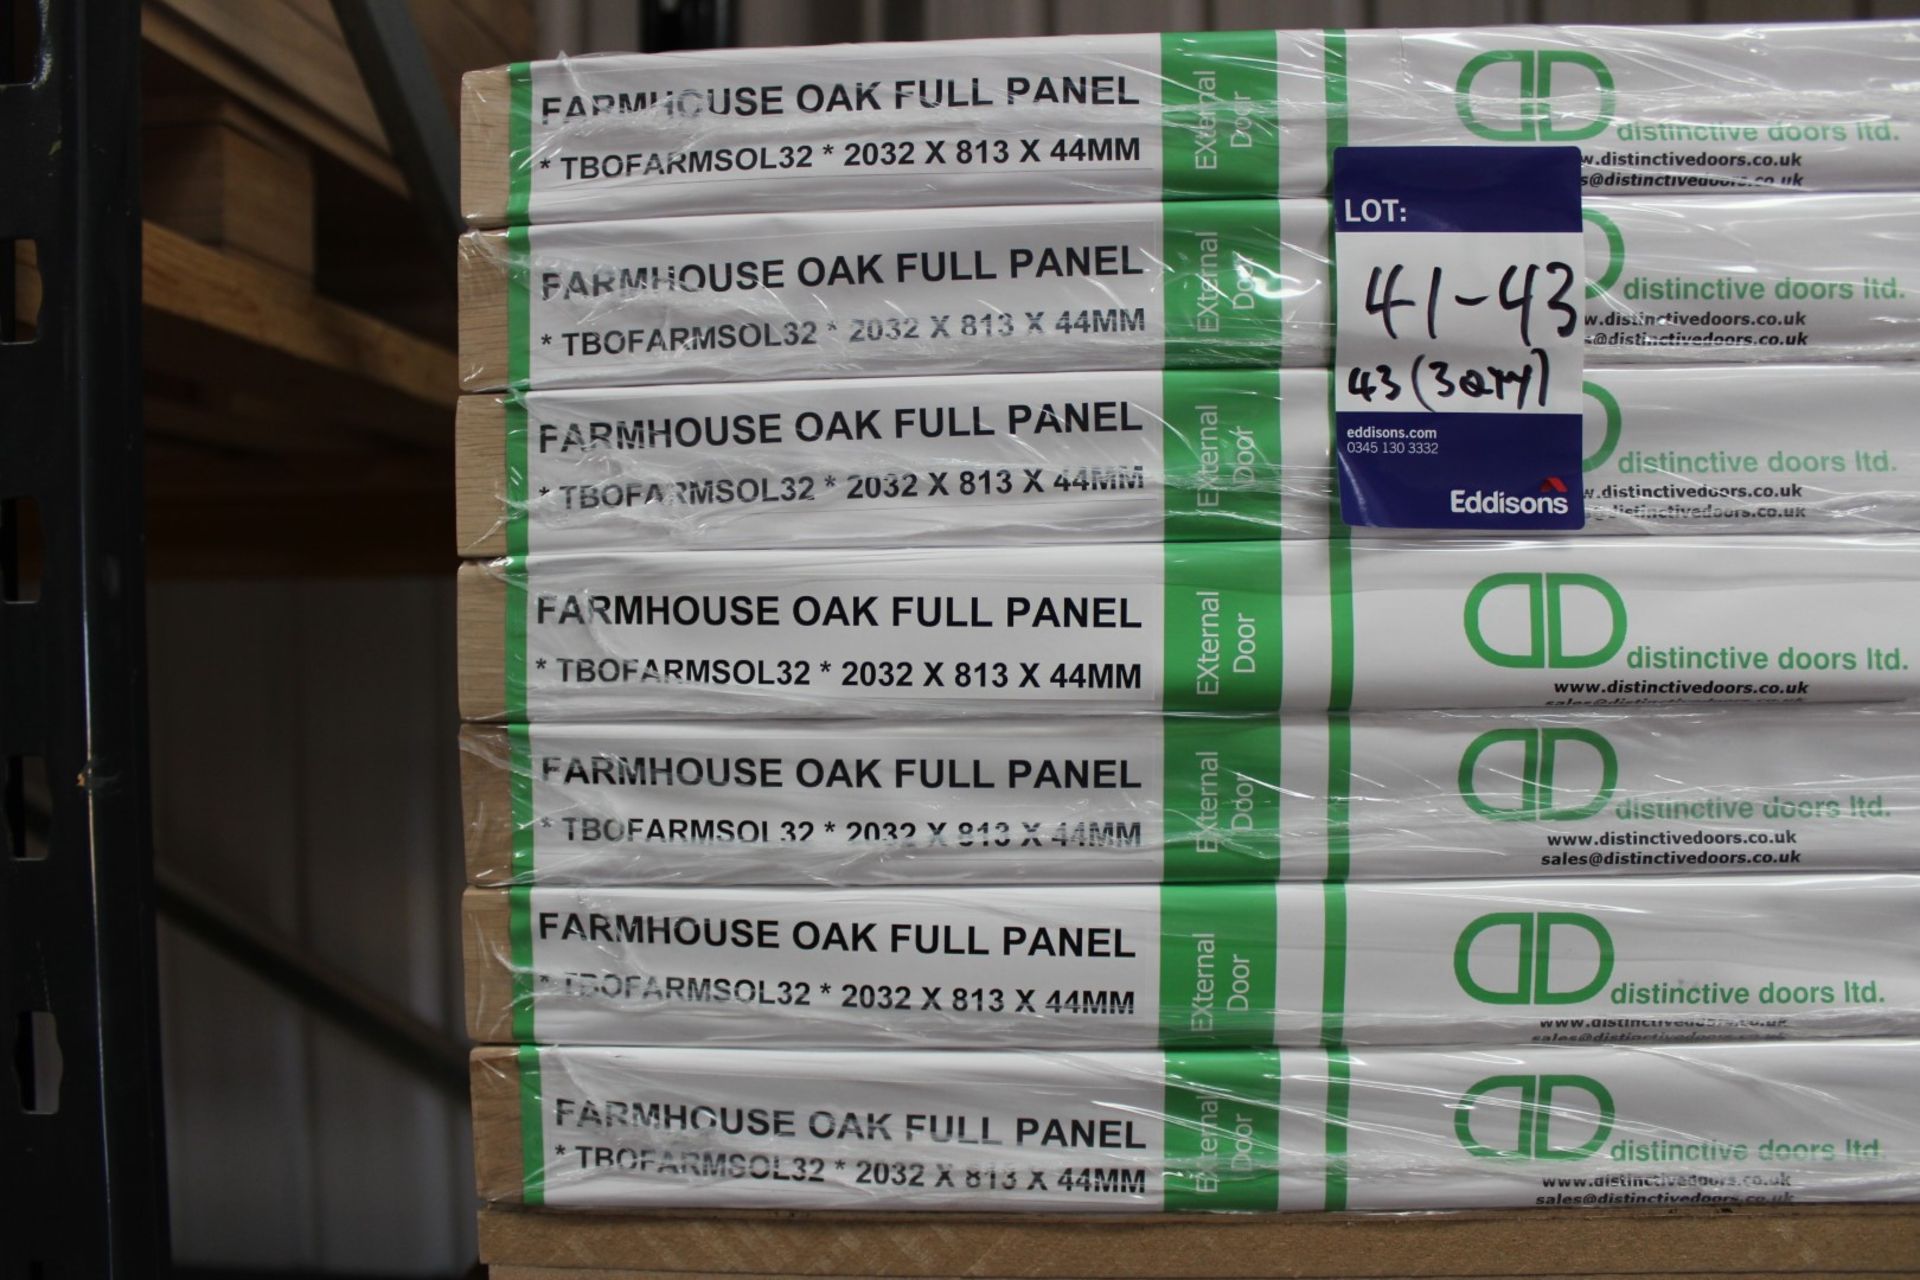 2 x Farmhouse Oak Full Panel external doors, TBOFARMSOL32, 2032mm x 813mm x 44mm - Lots to be handed - Image 3 of 3